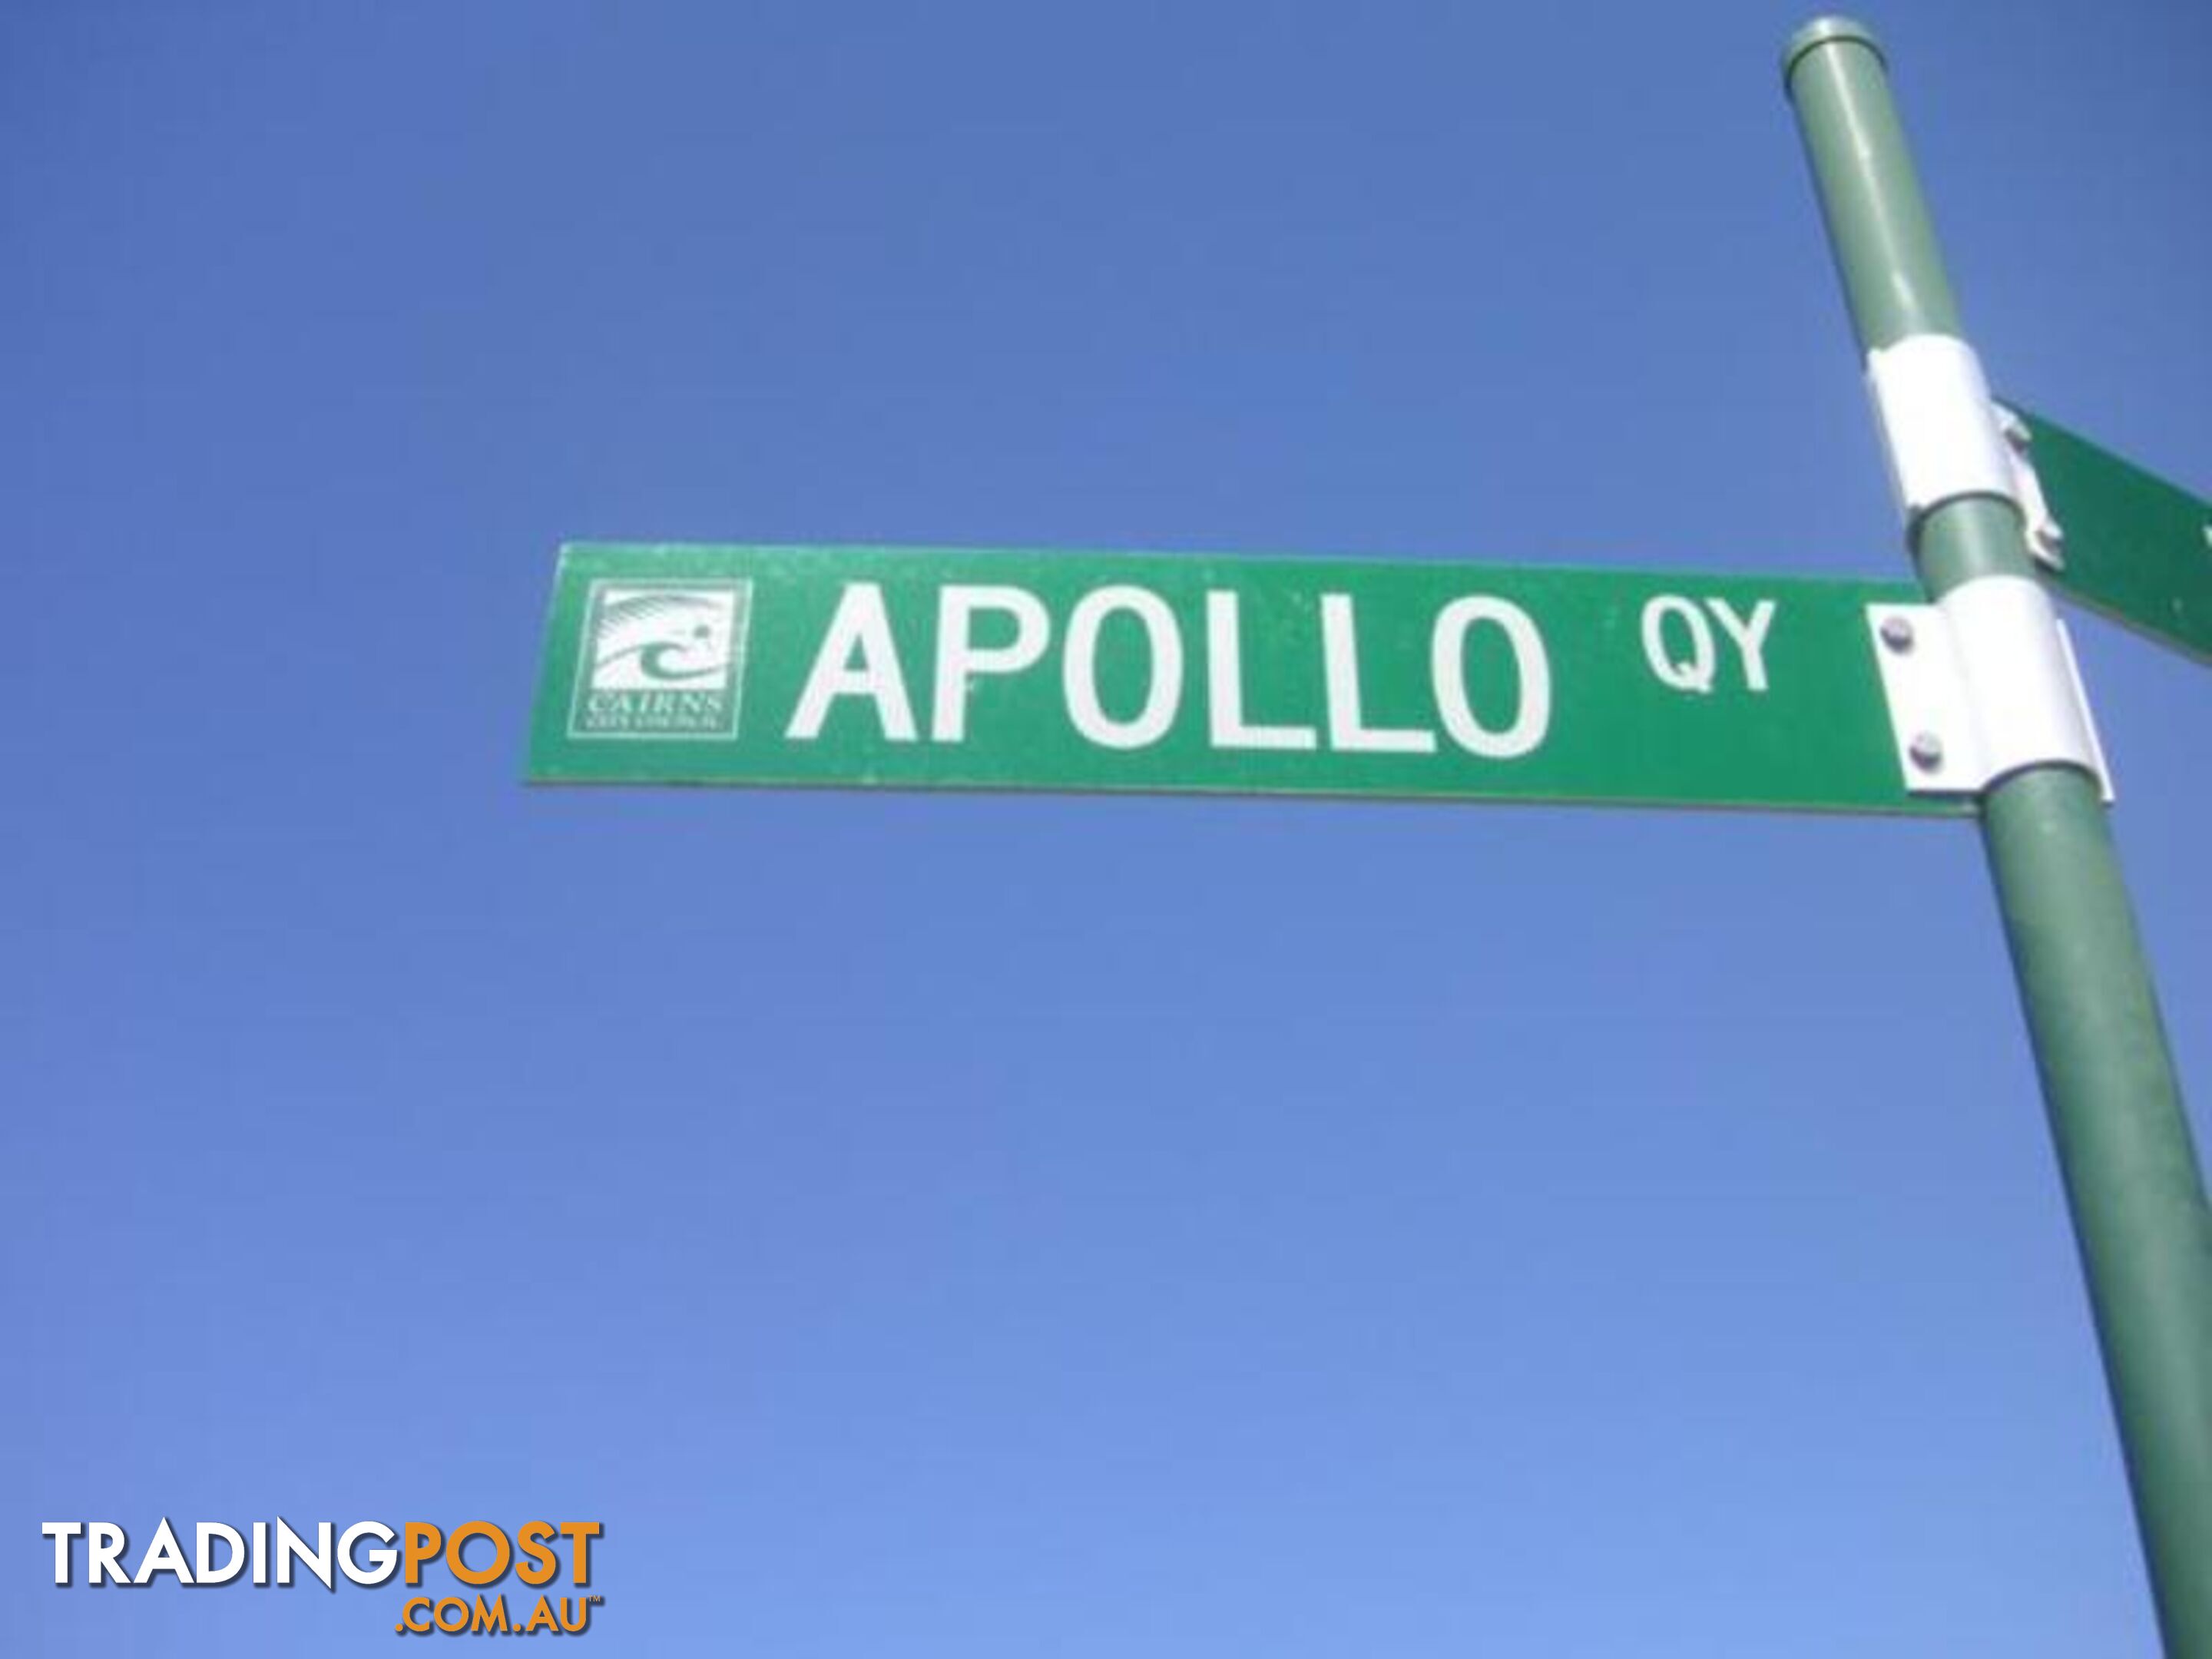 Lot 90 6 Apollo QY TRINITY PARK QLD 4879